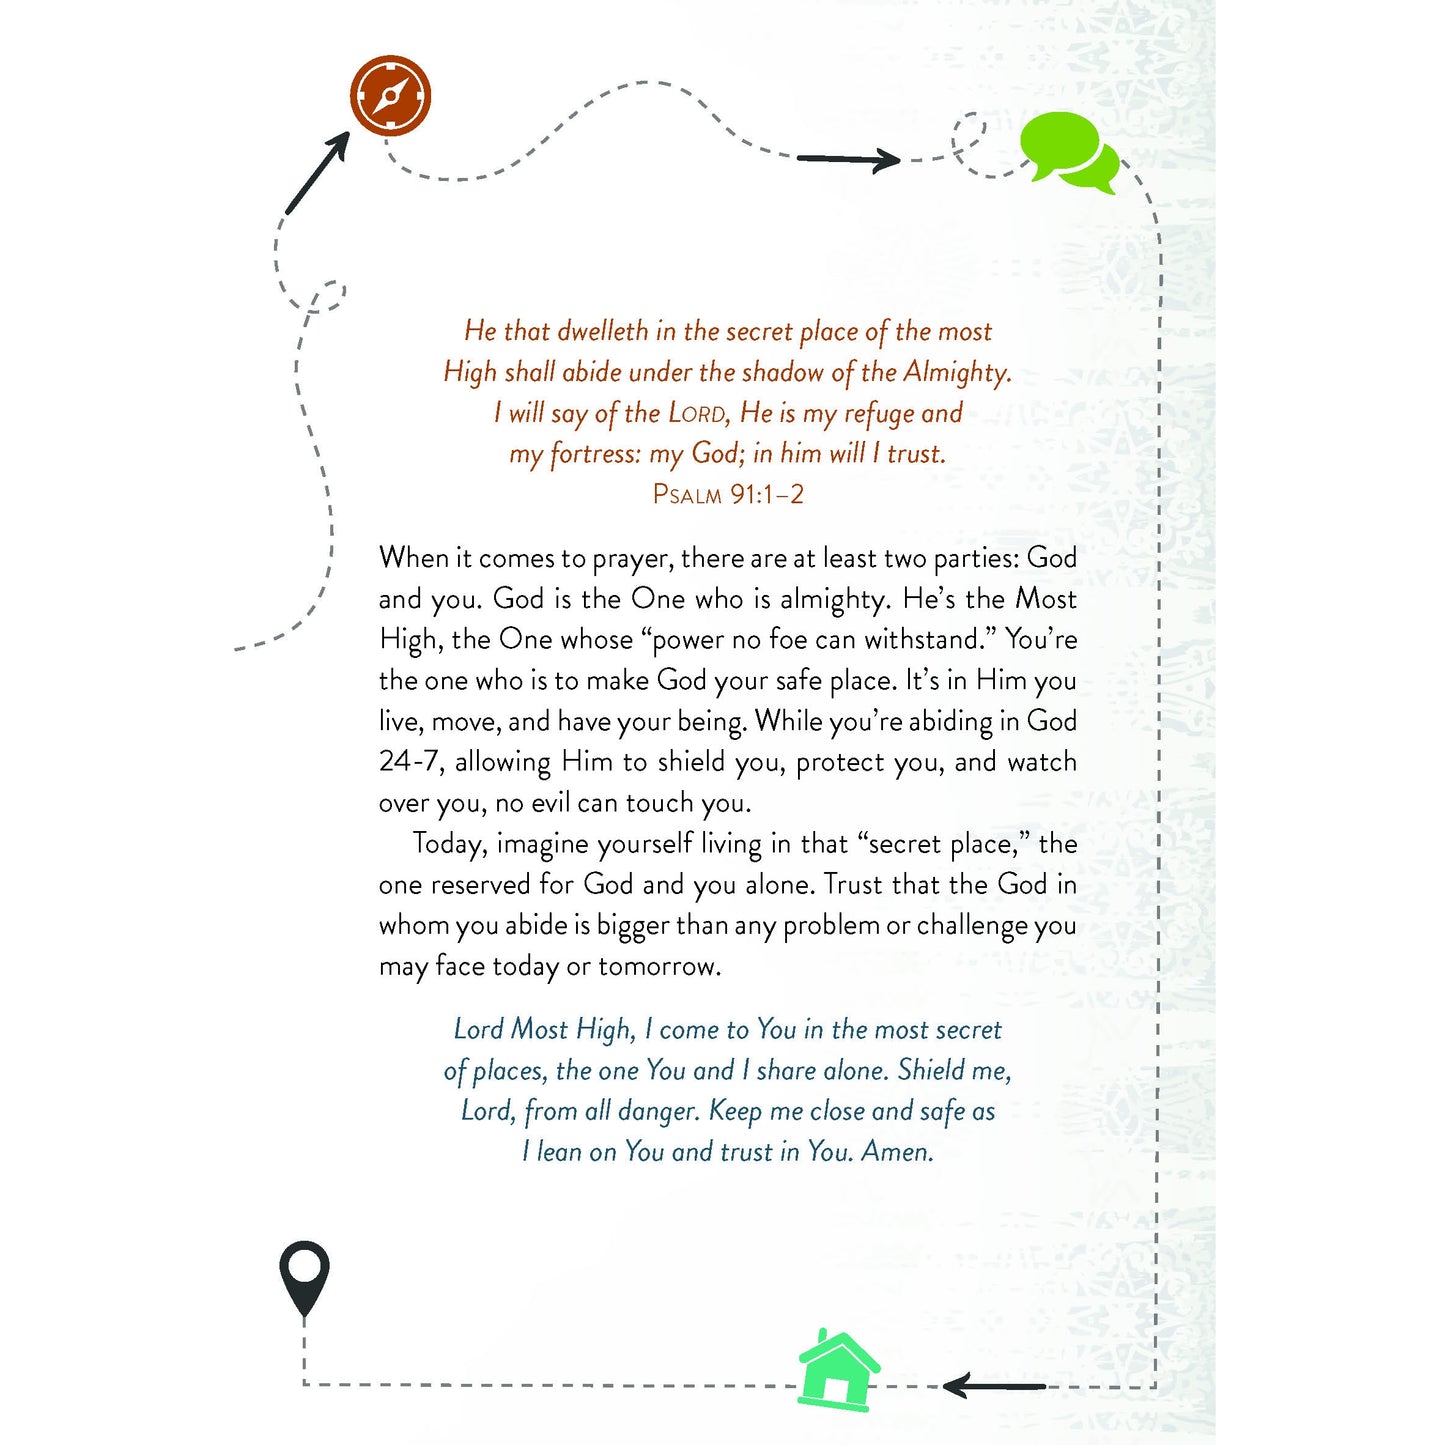 The KJV Prayer Map Bible | Mint Blossoms